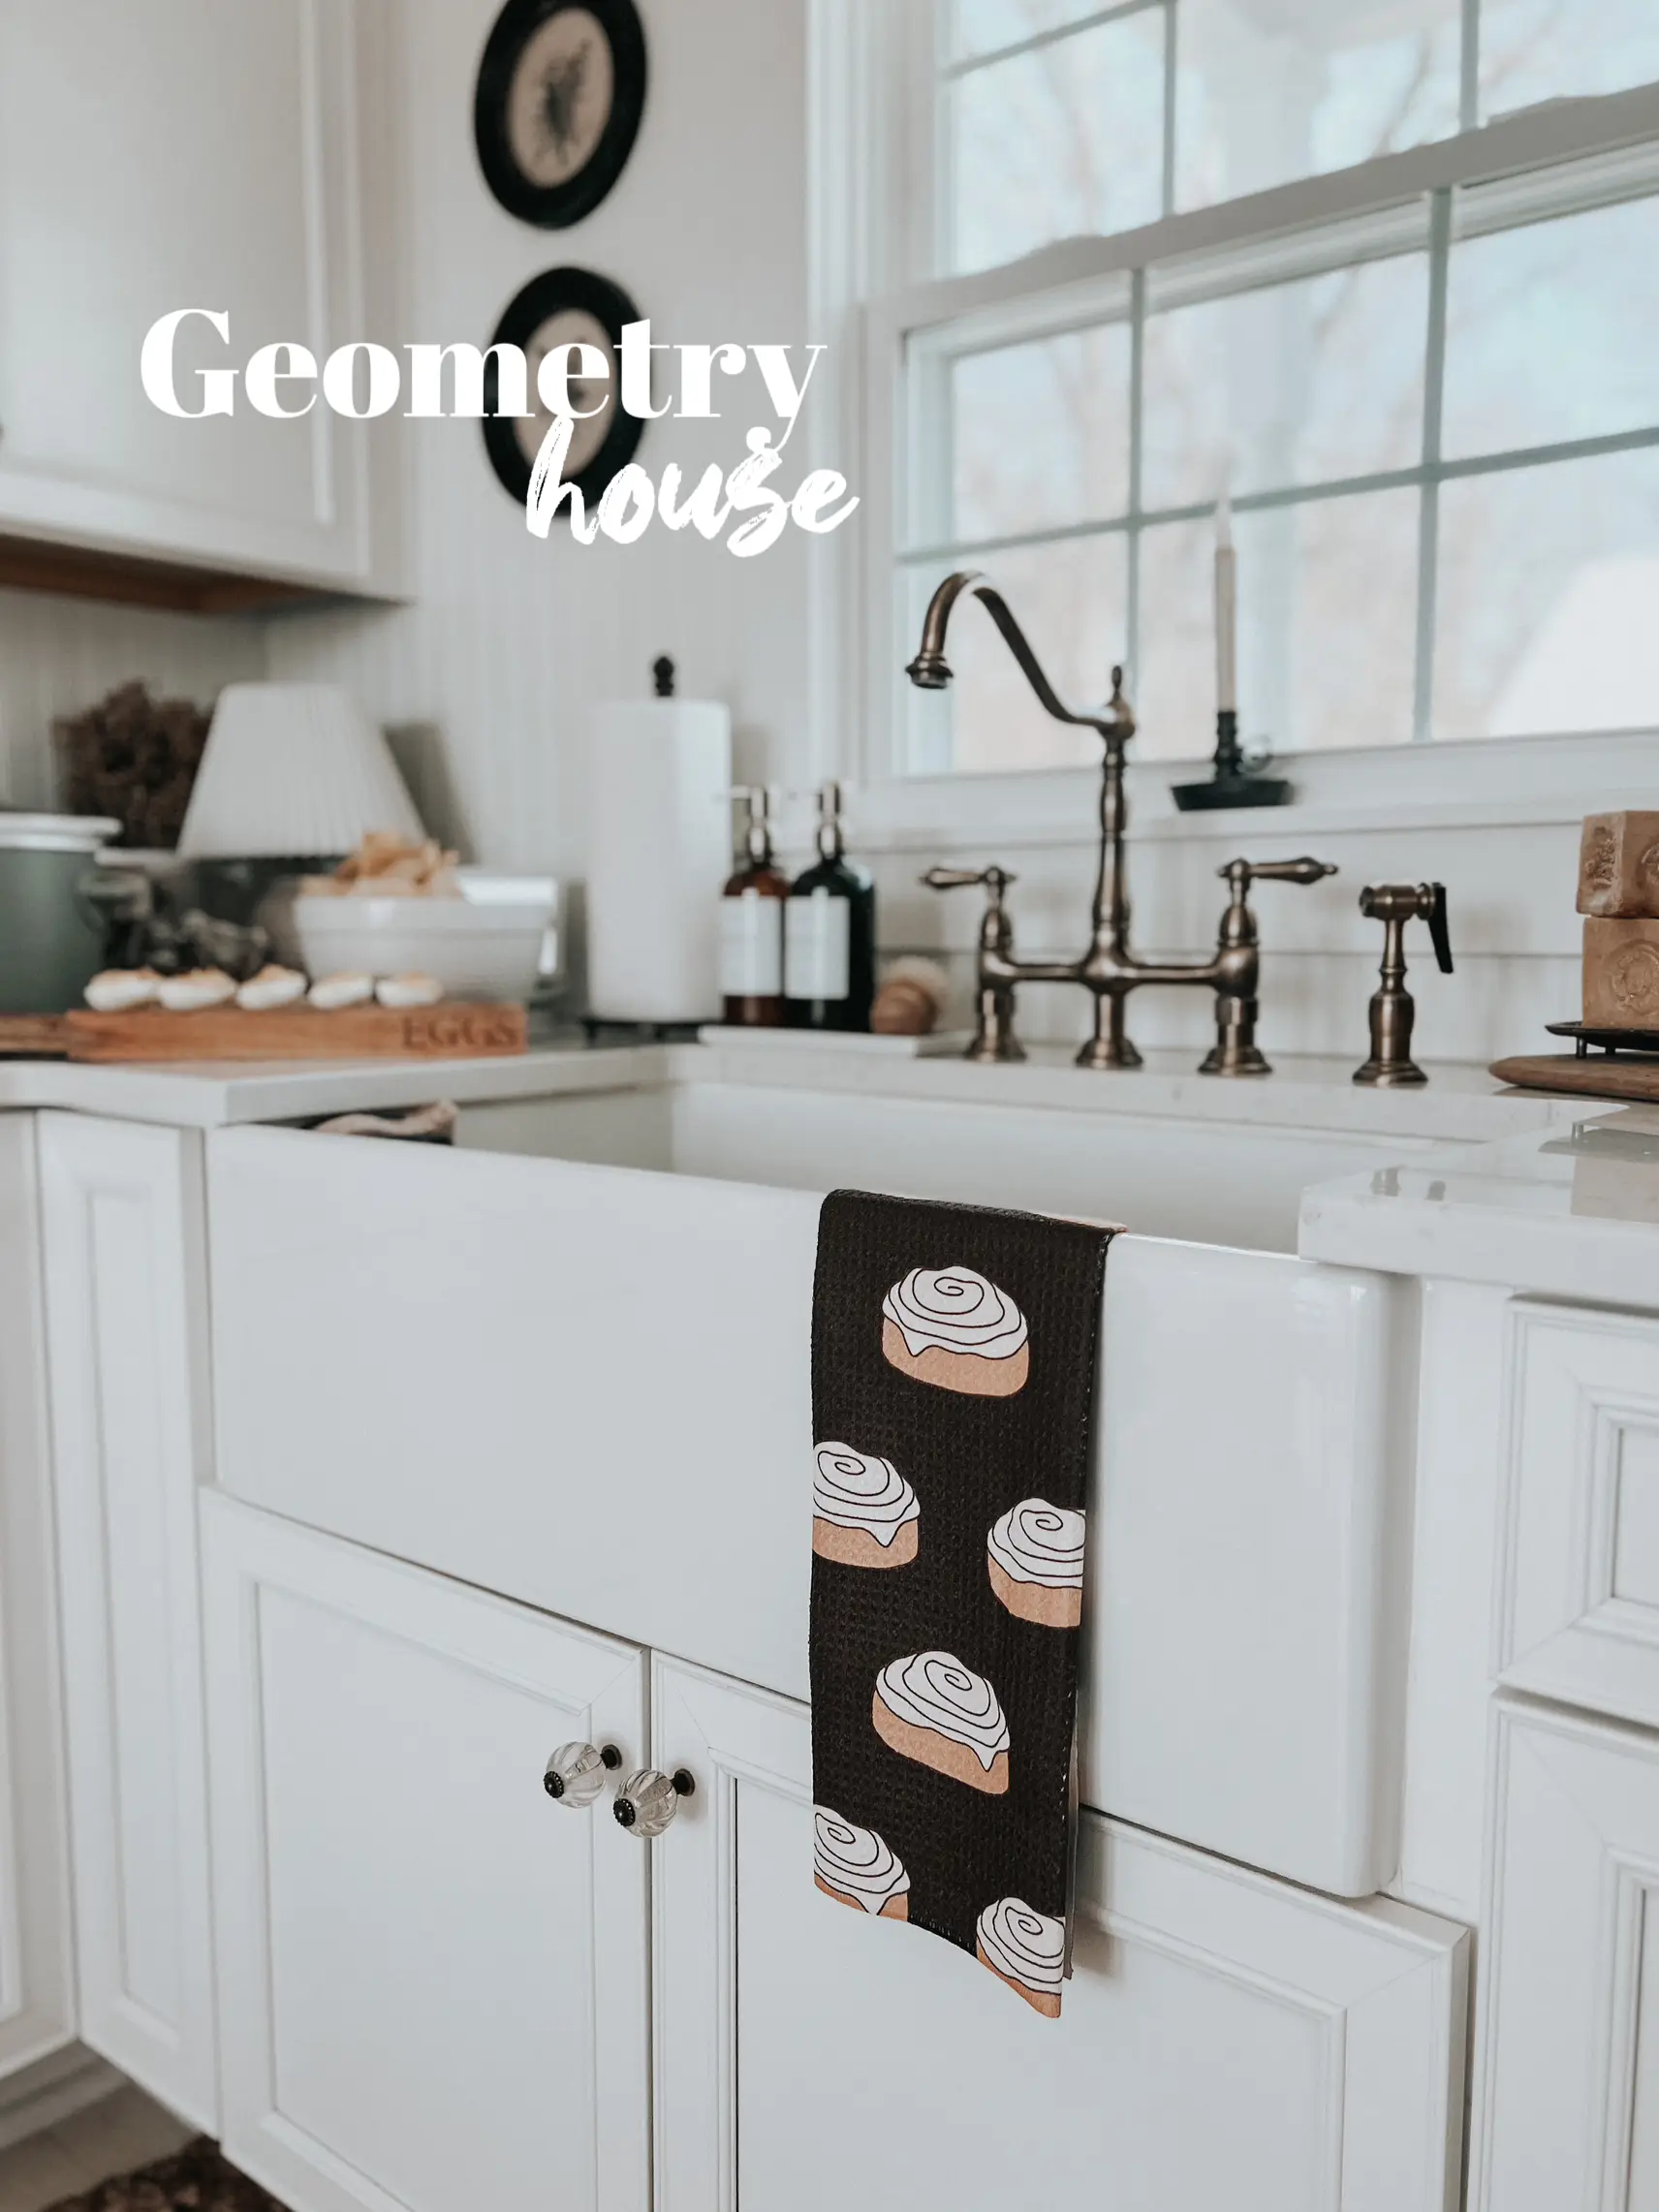 Geometry House Kitchen Tea Towel Review